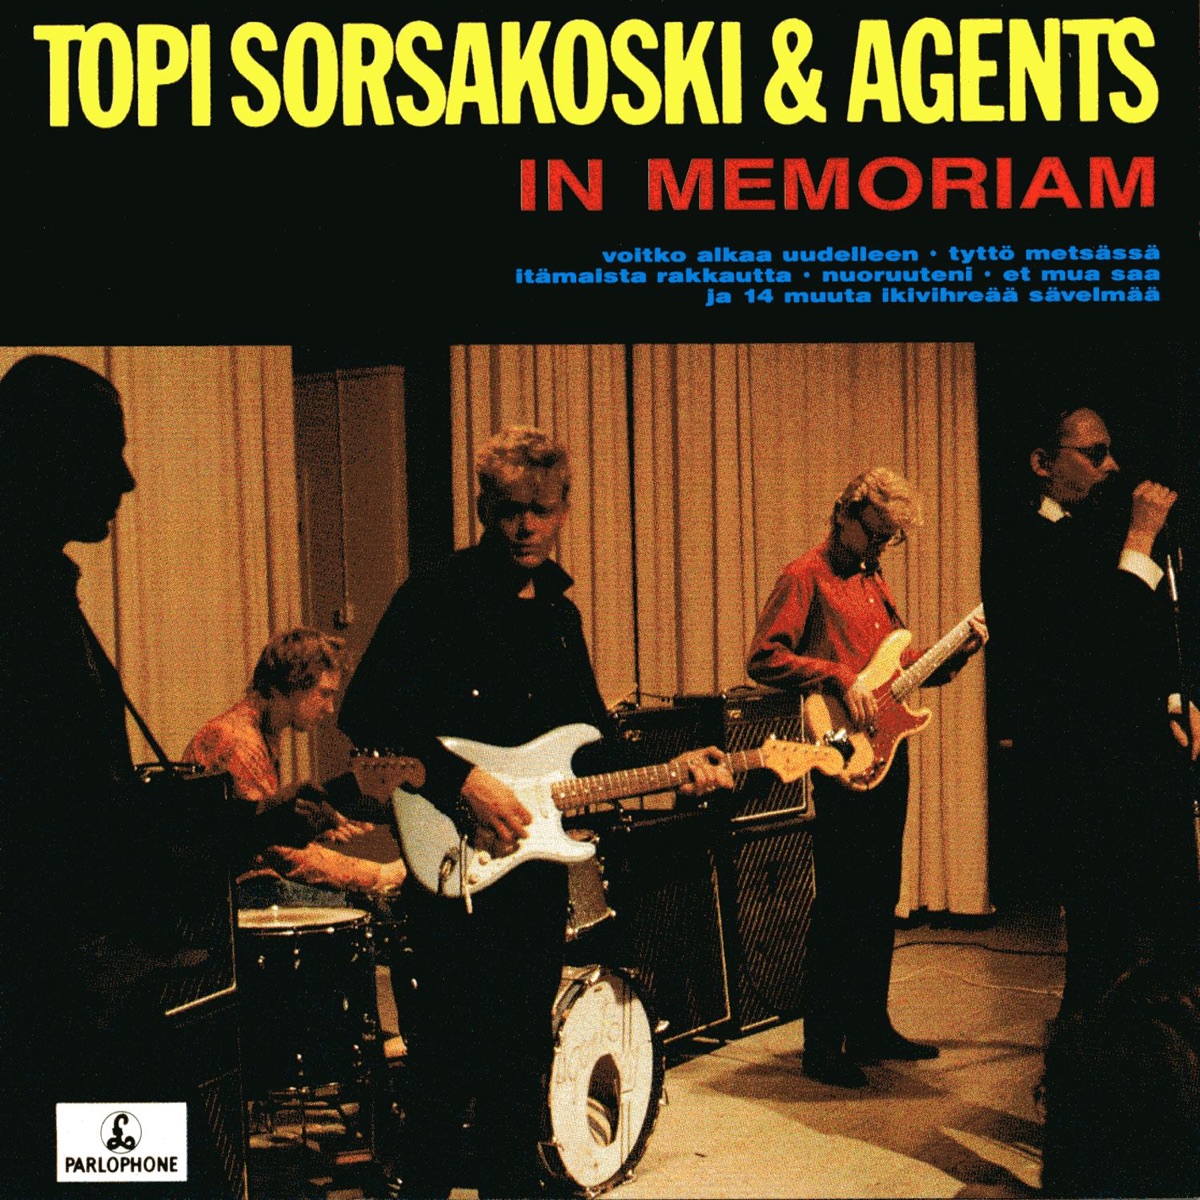 Greatest Hits by Topi Sorsakoski & Agents on Apple Music